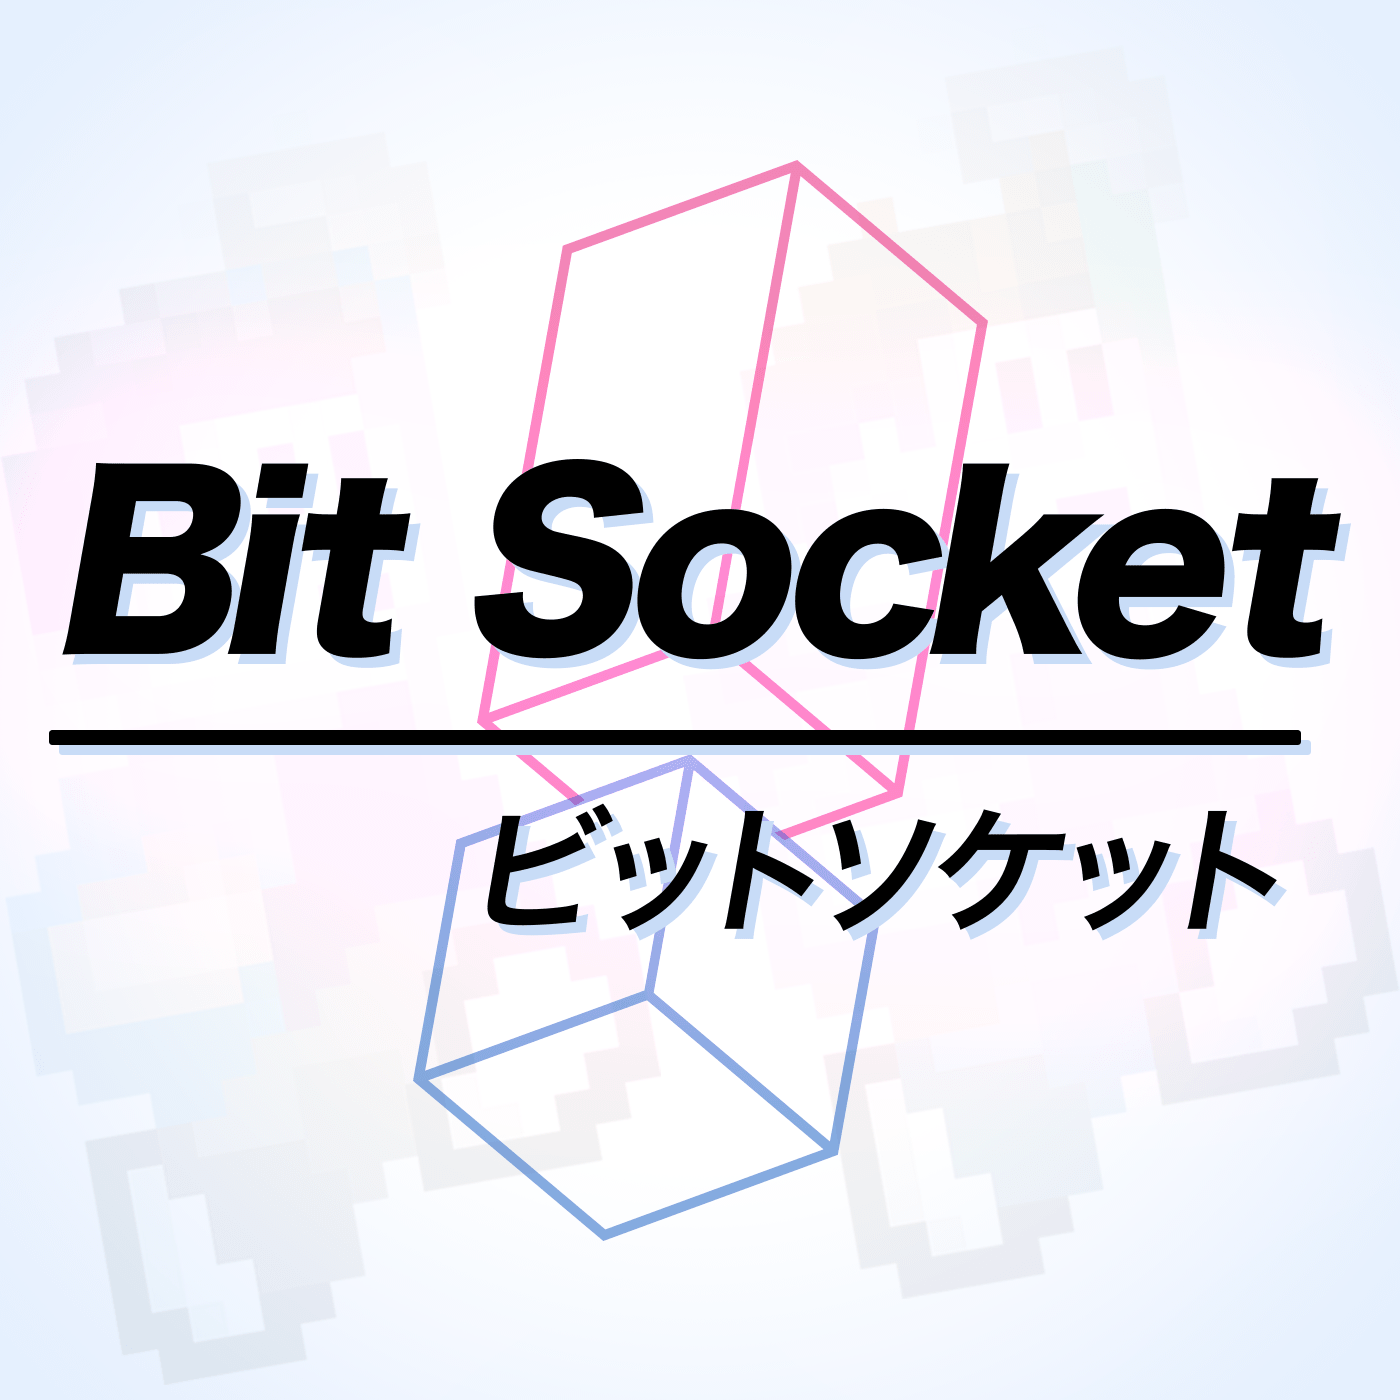 Episode 90: Keep Bit Socketin’